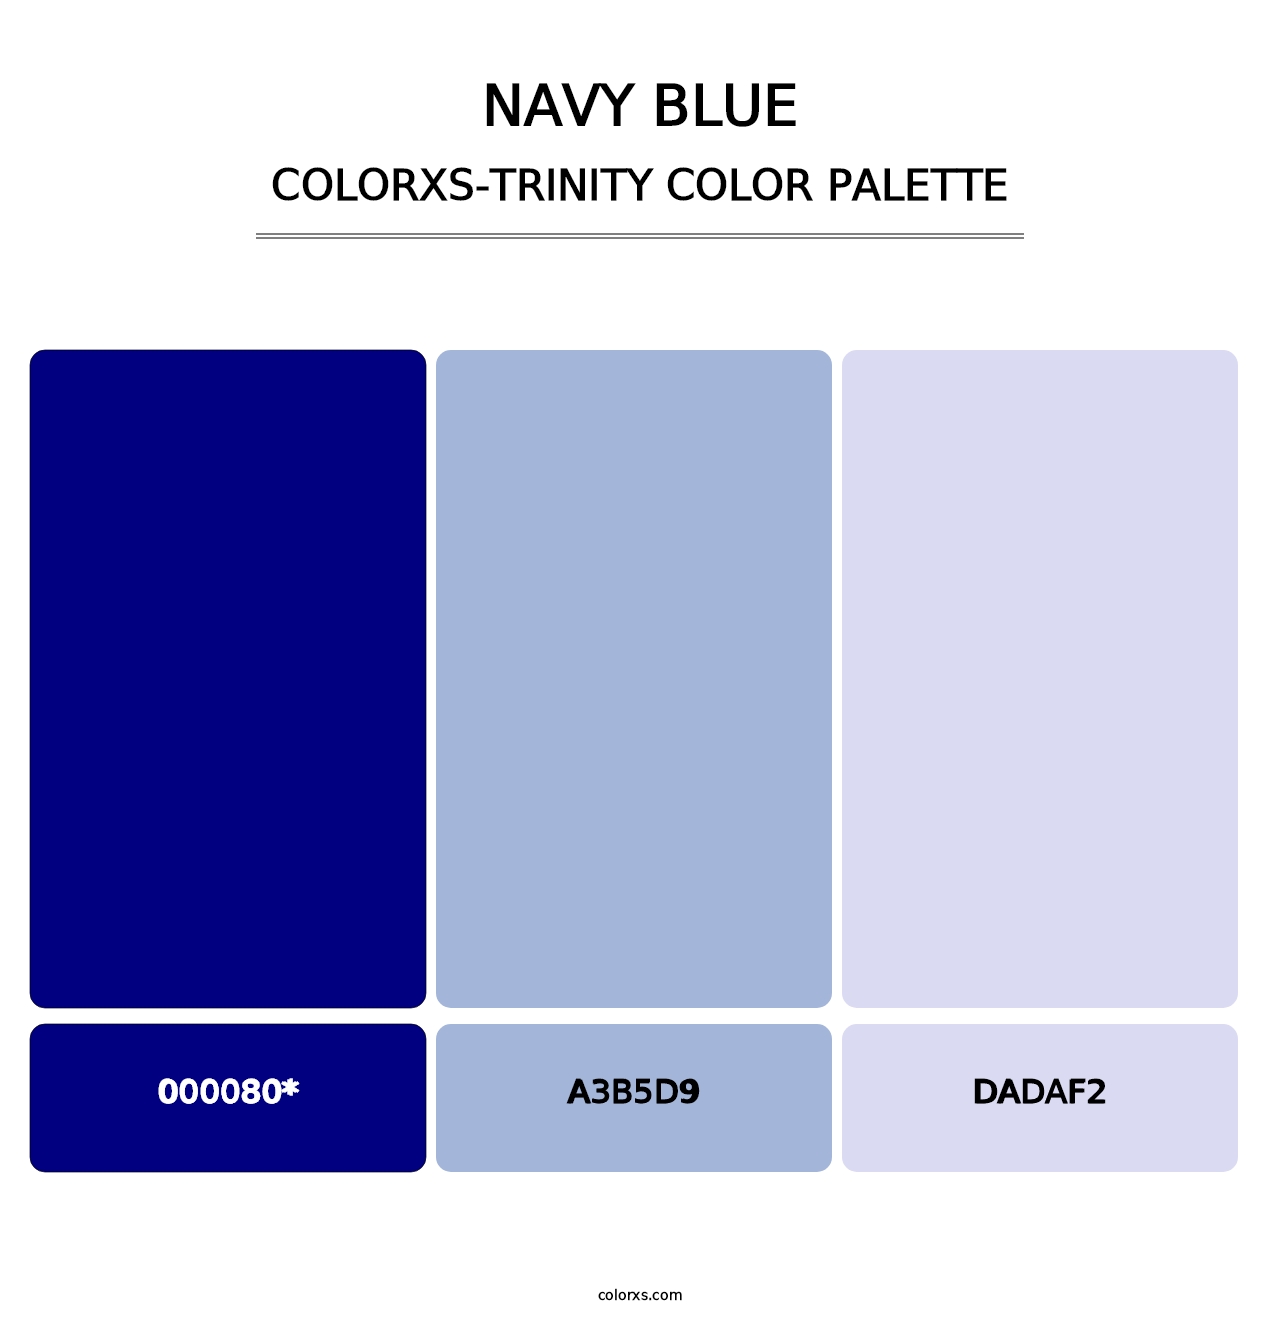 Navy Blue - Colorxs Trinity Palette